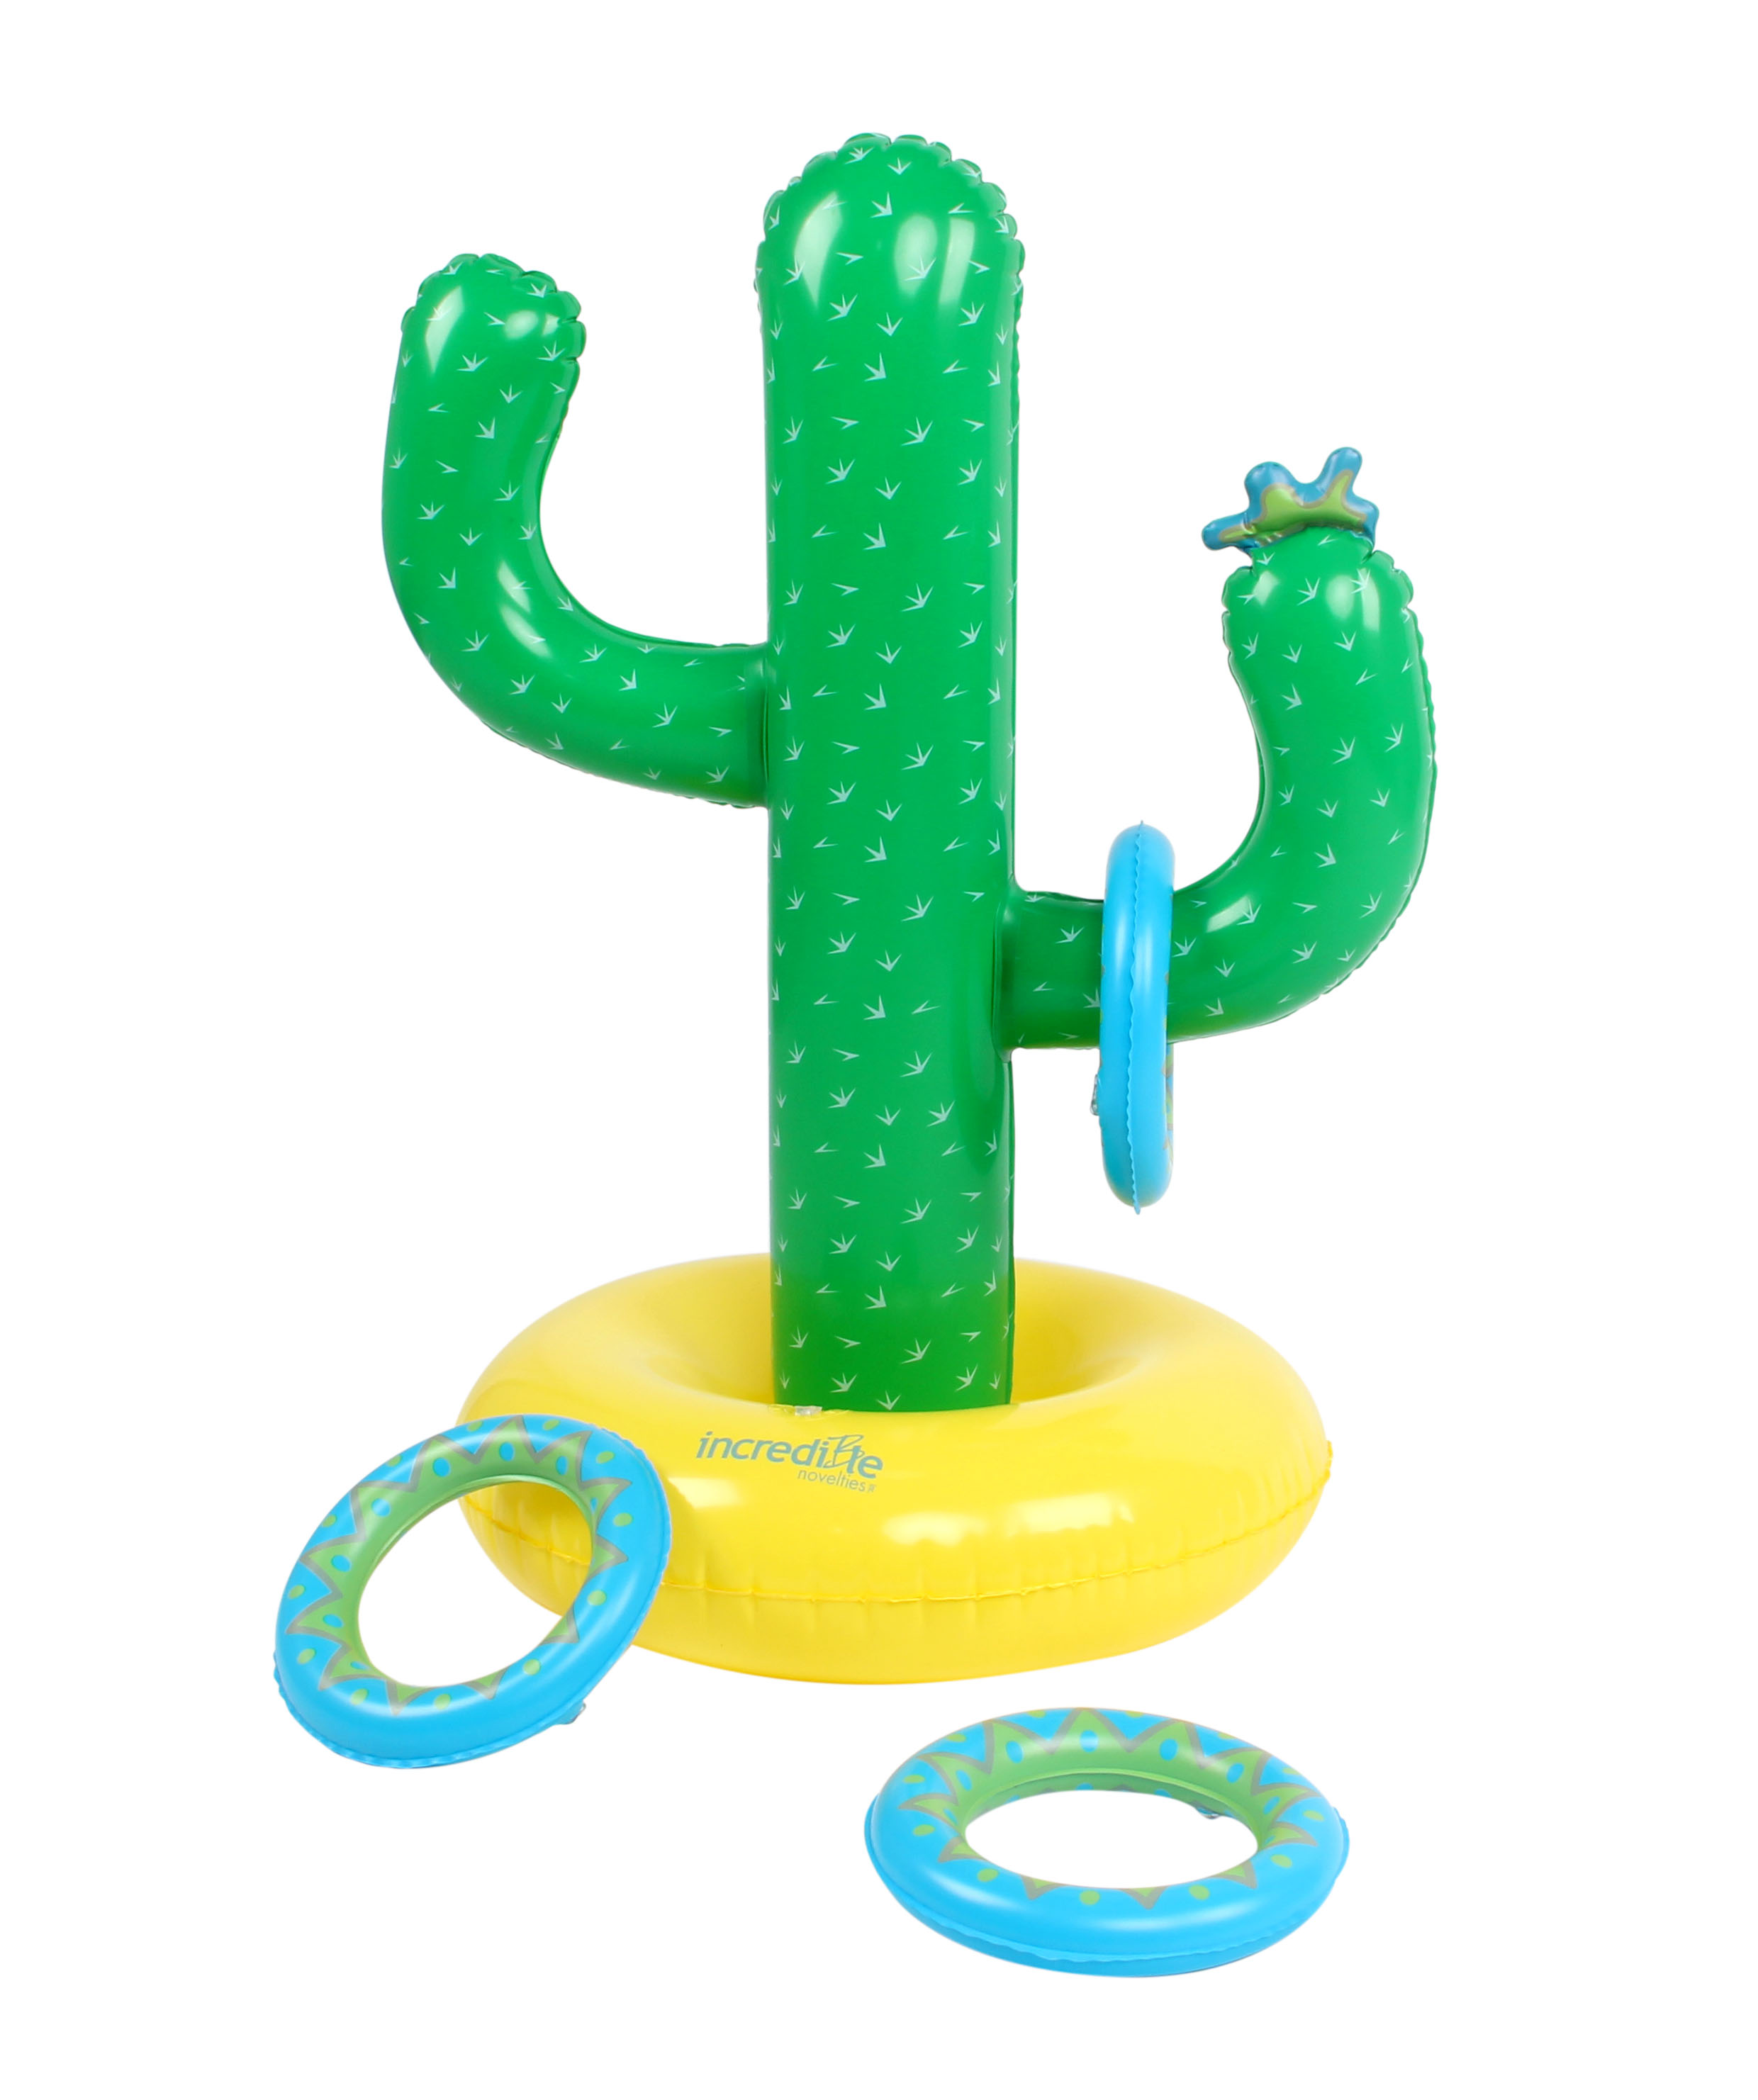 Cactus ring toss